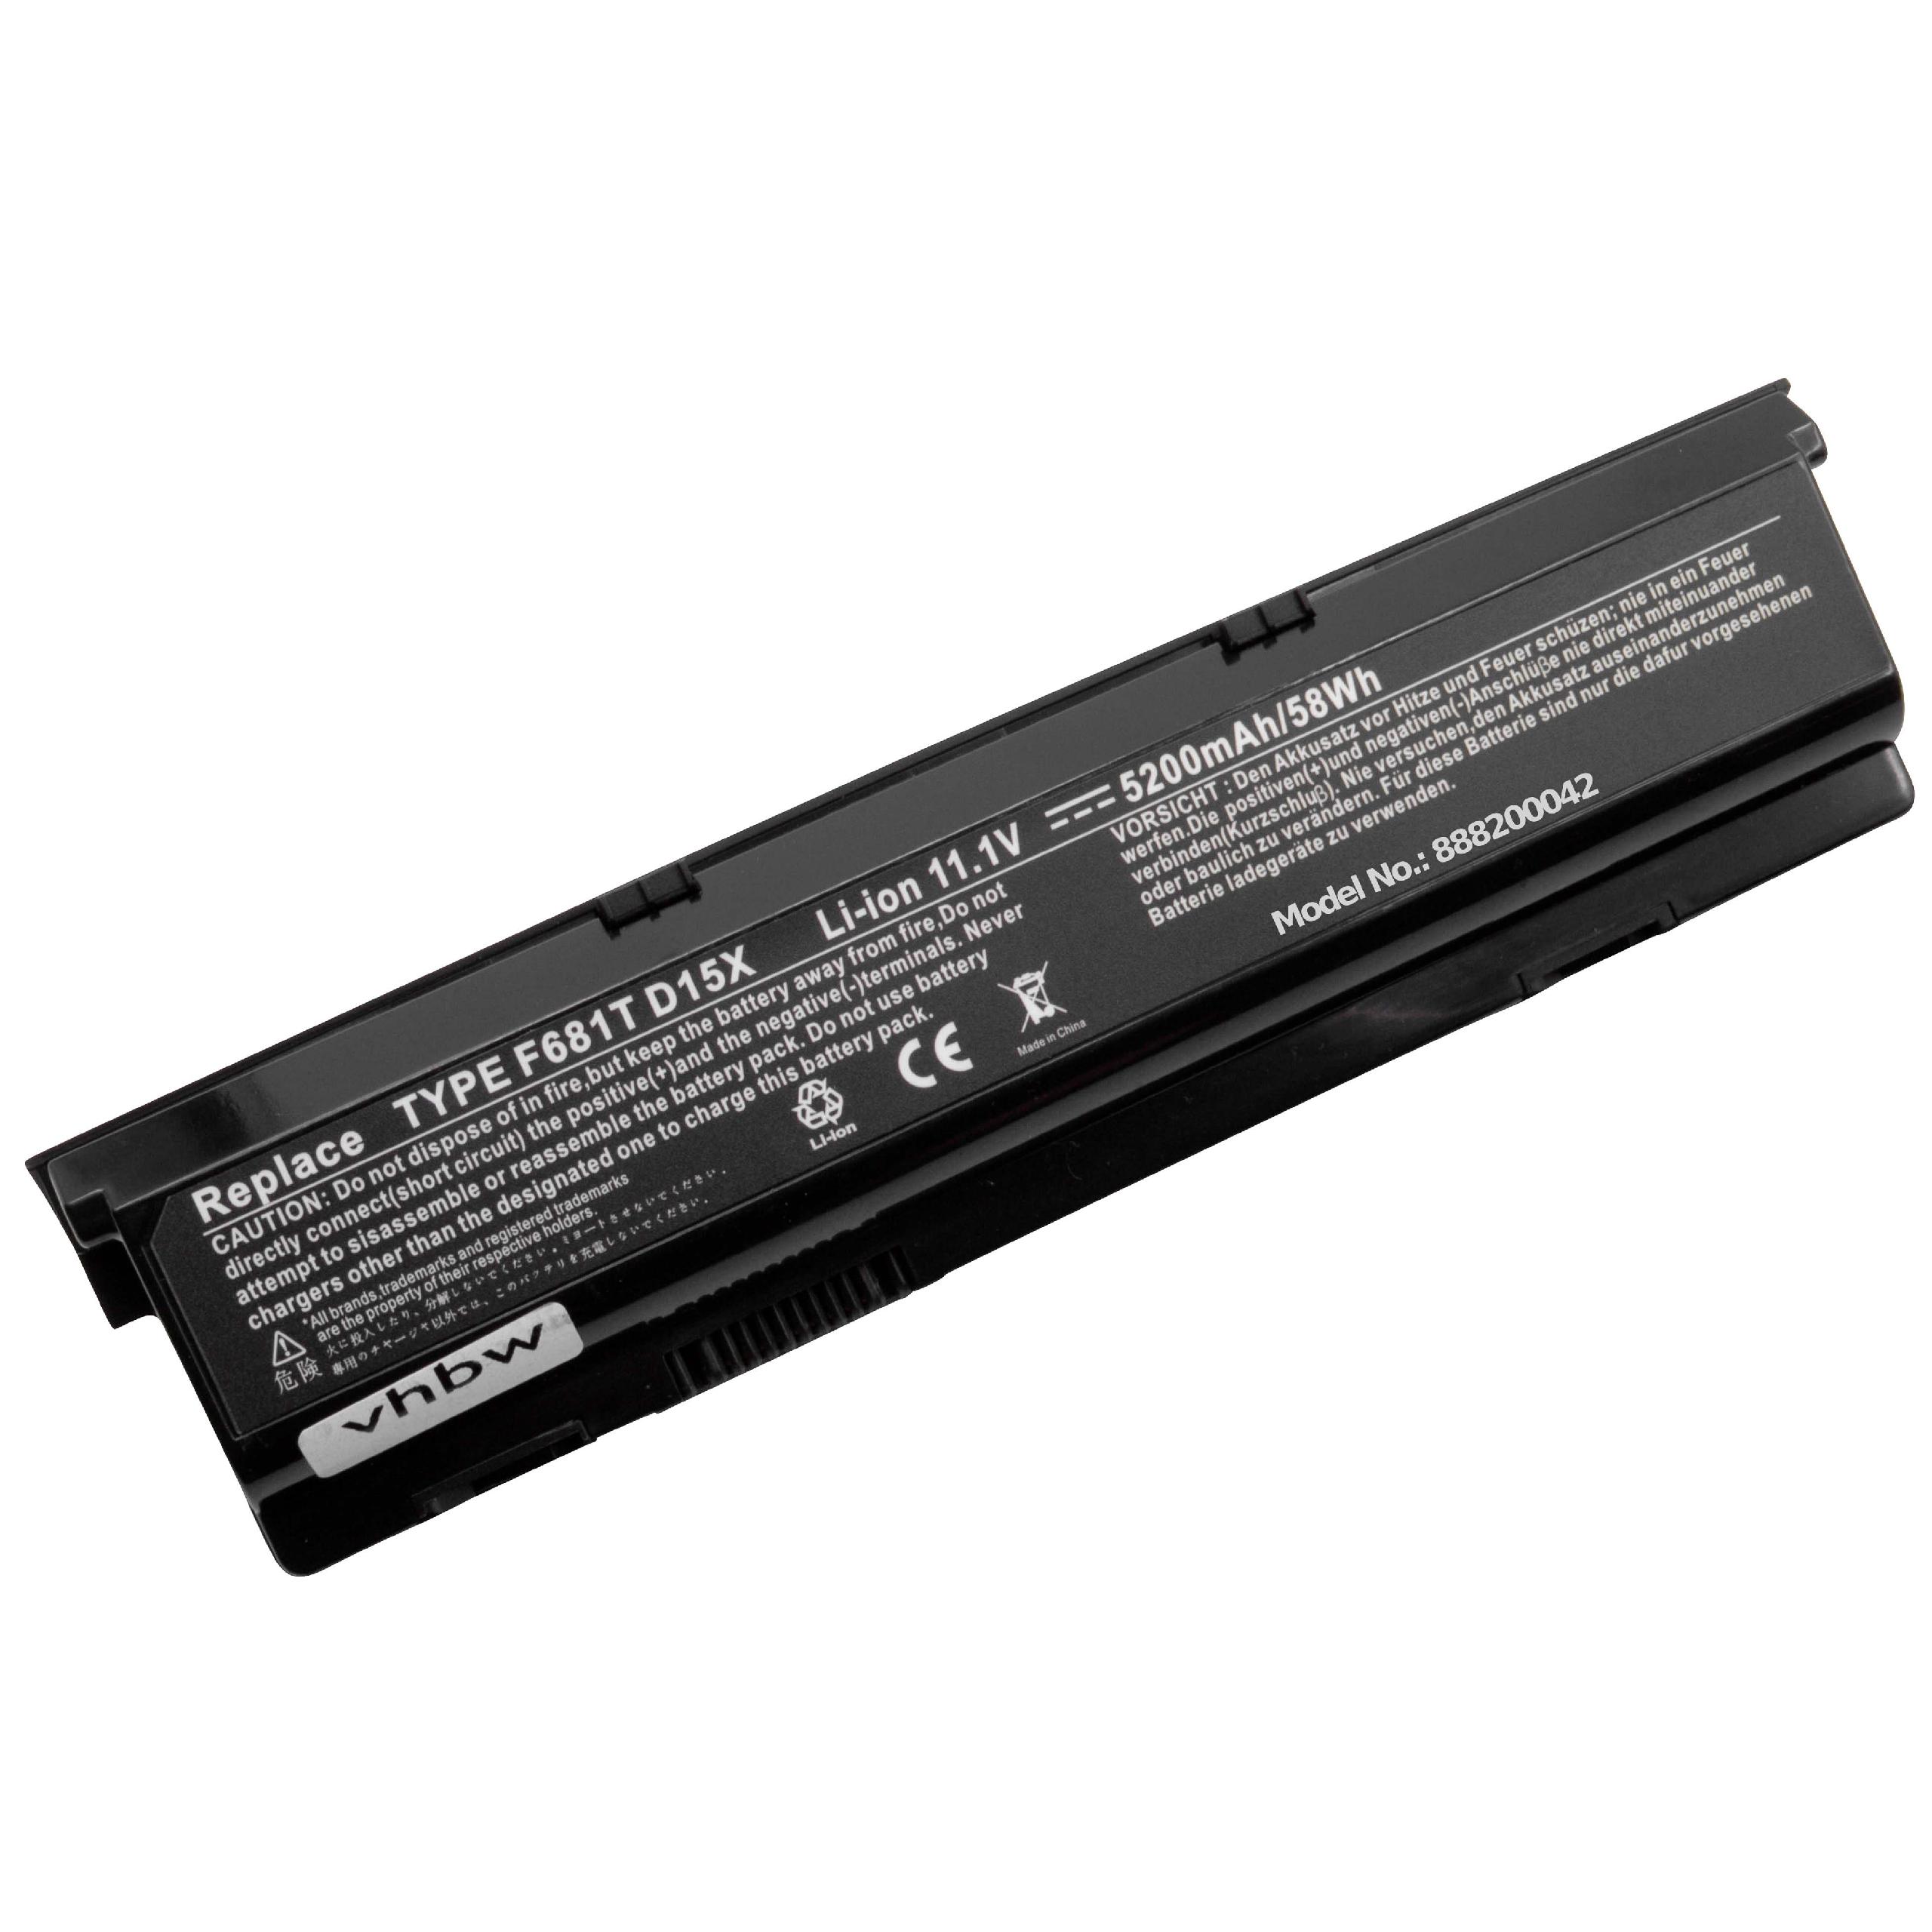 Batería reemplaza Dell 0HC26Y, 0F681T, 0D951T, 0W3VX3 para notebook Dell - 5200 mAh 11,1 V Li-Ion negro